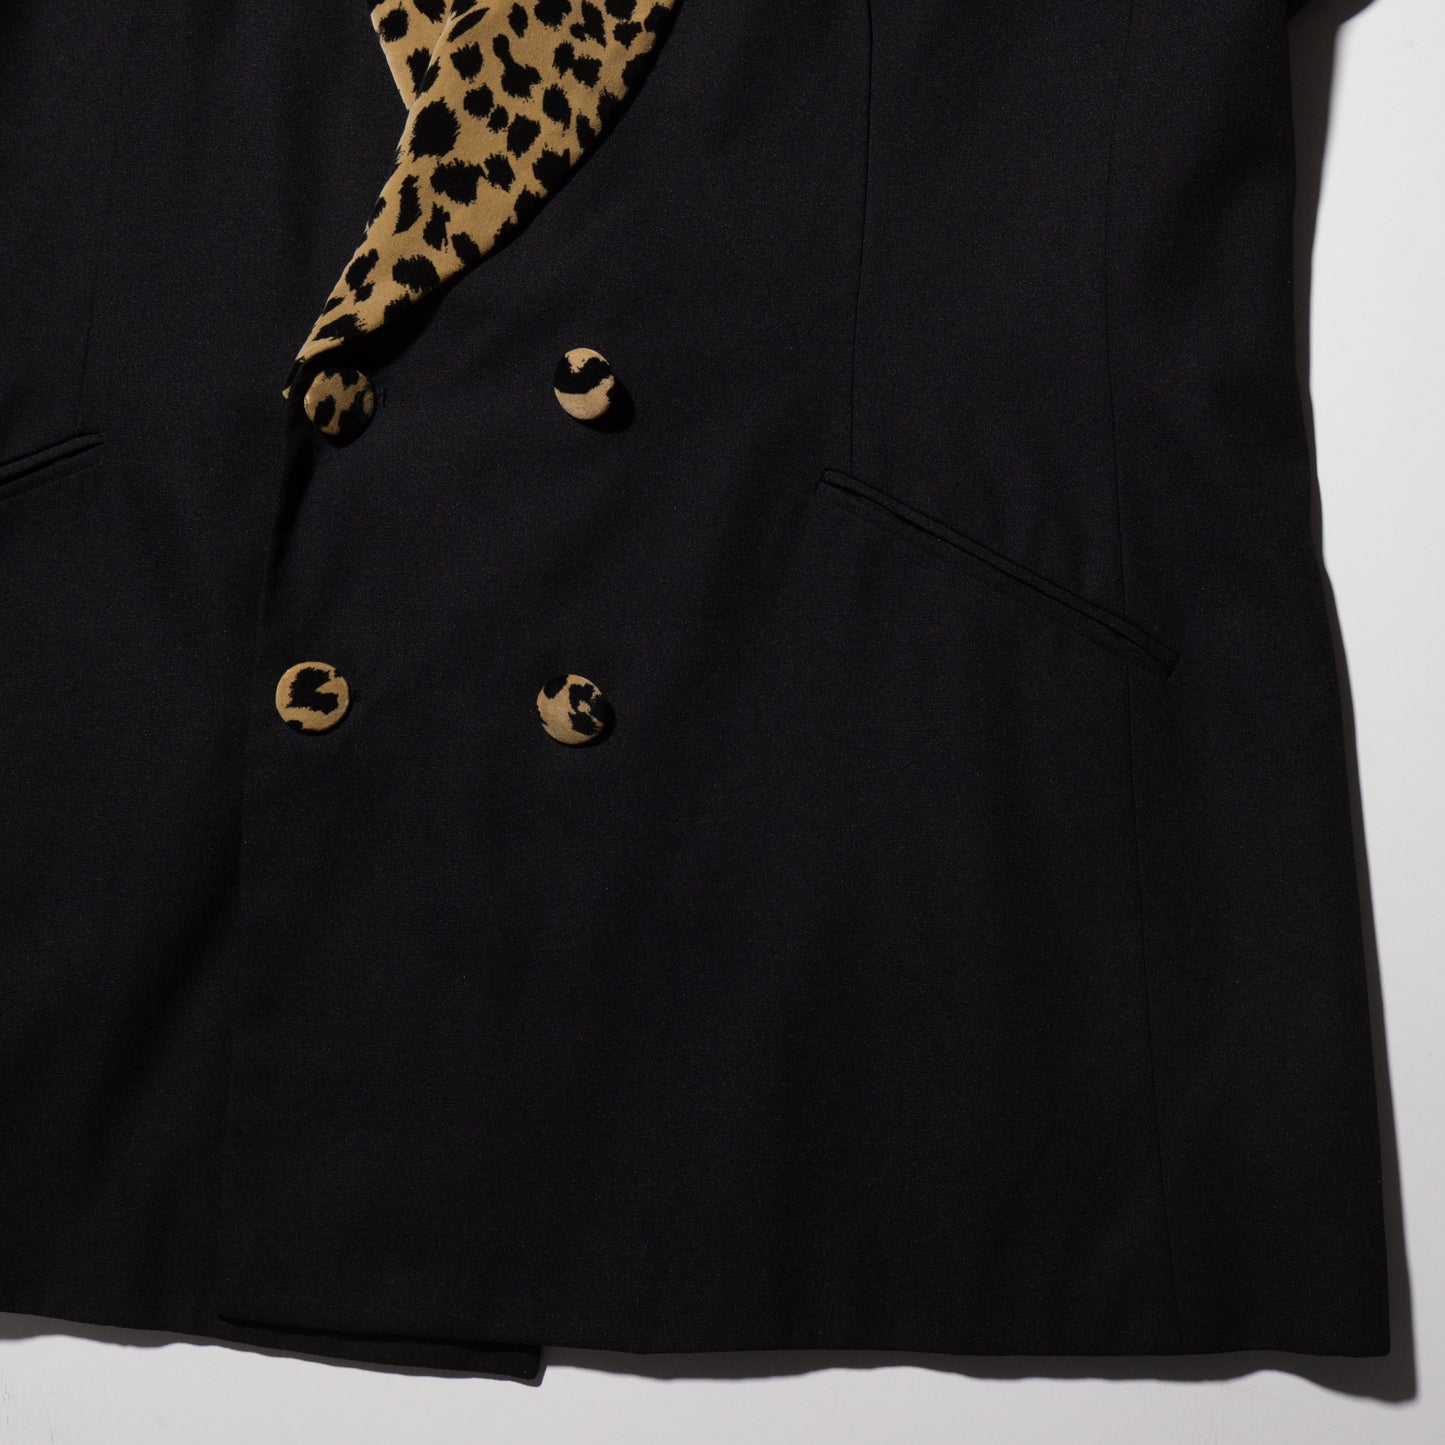 vintage leopard smoking jacket